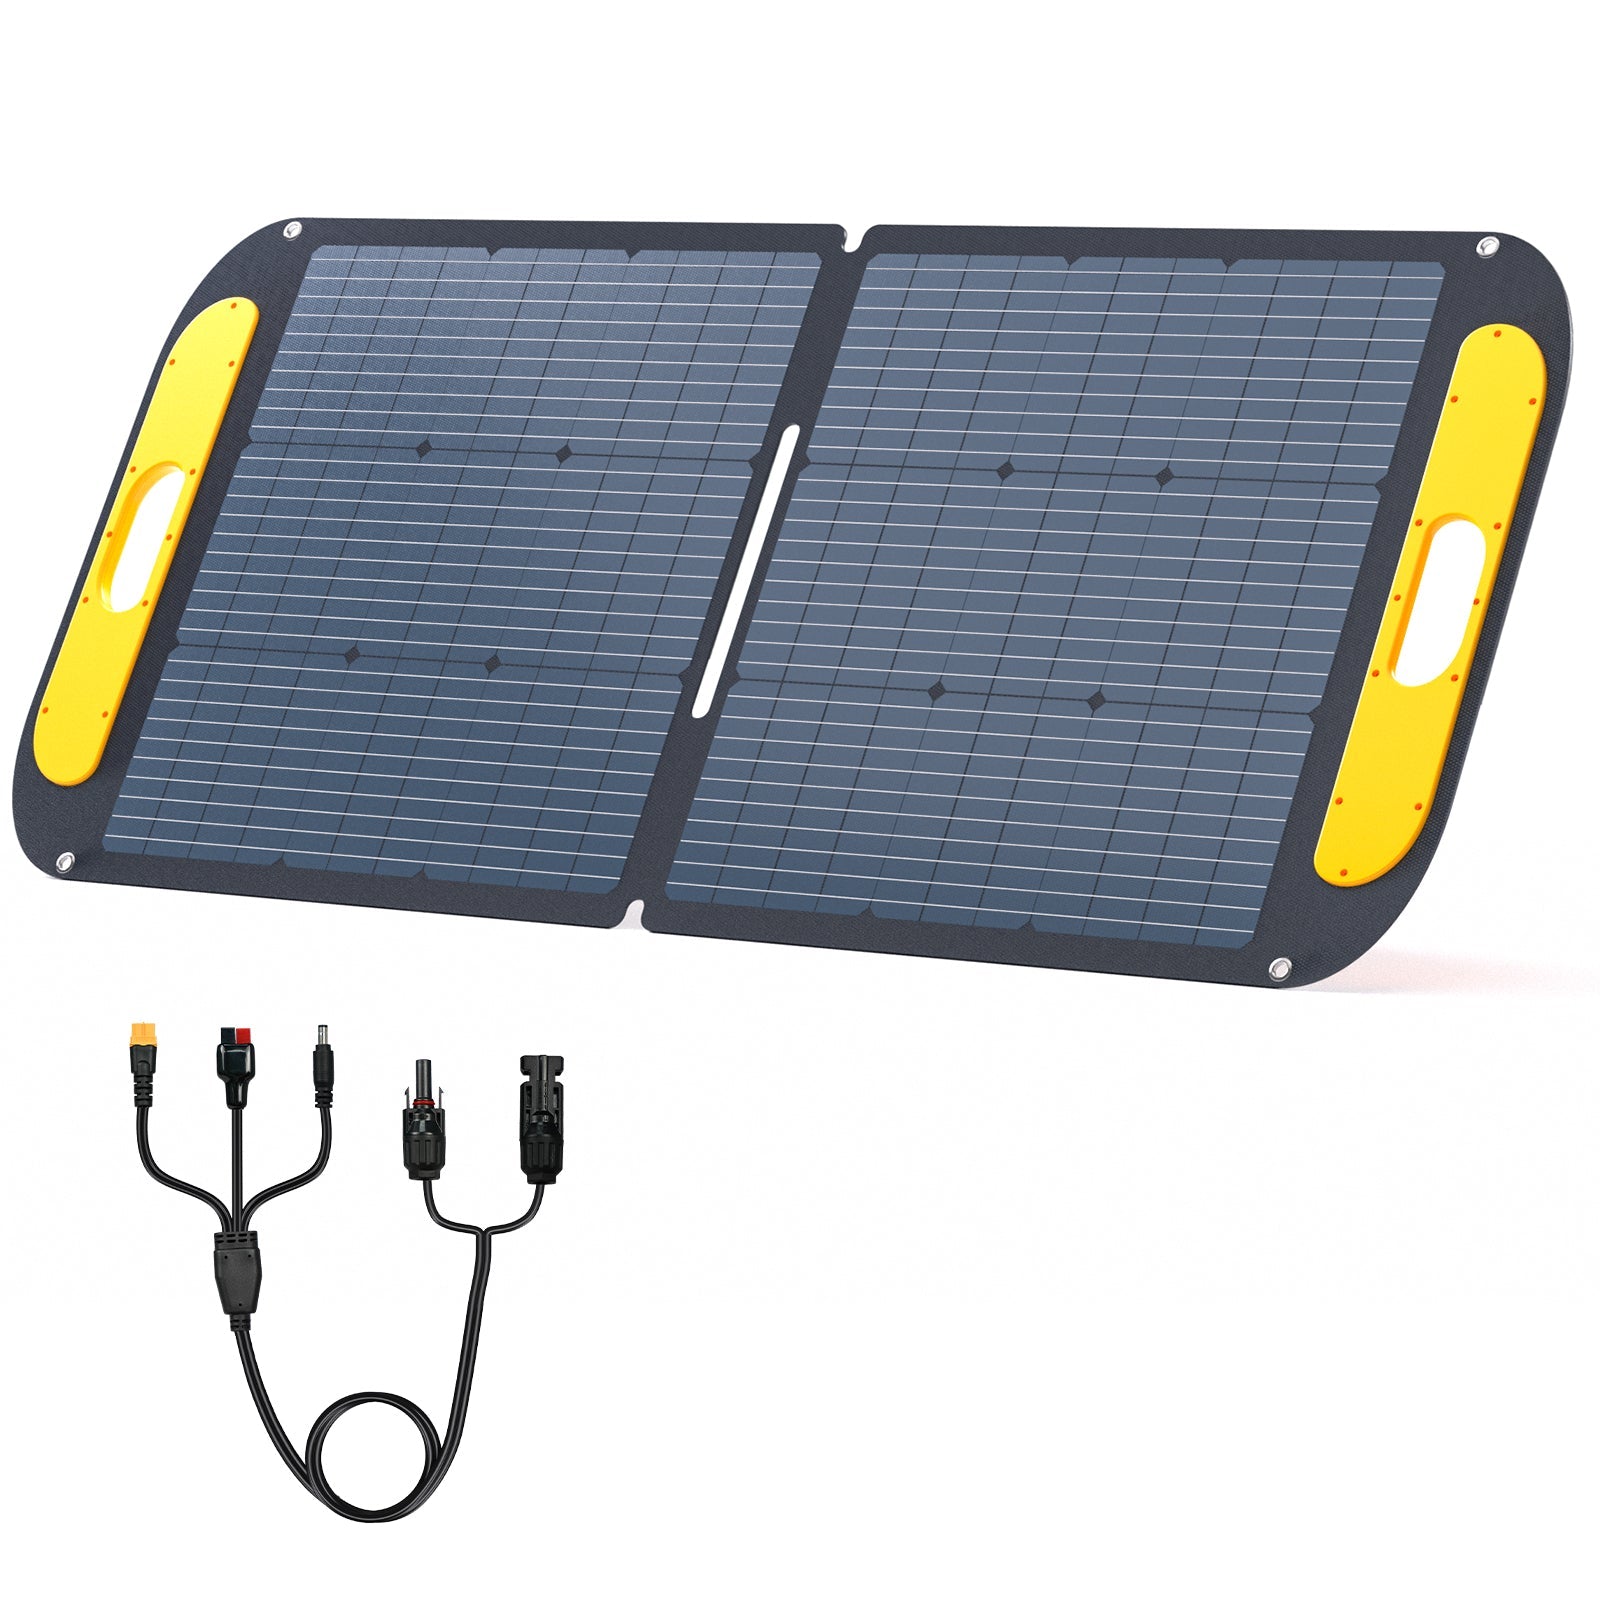 110w-19v solar panel save